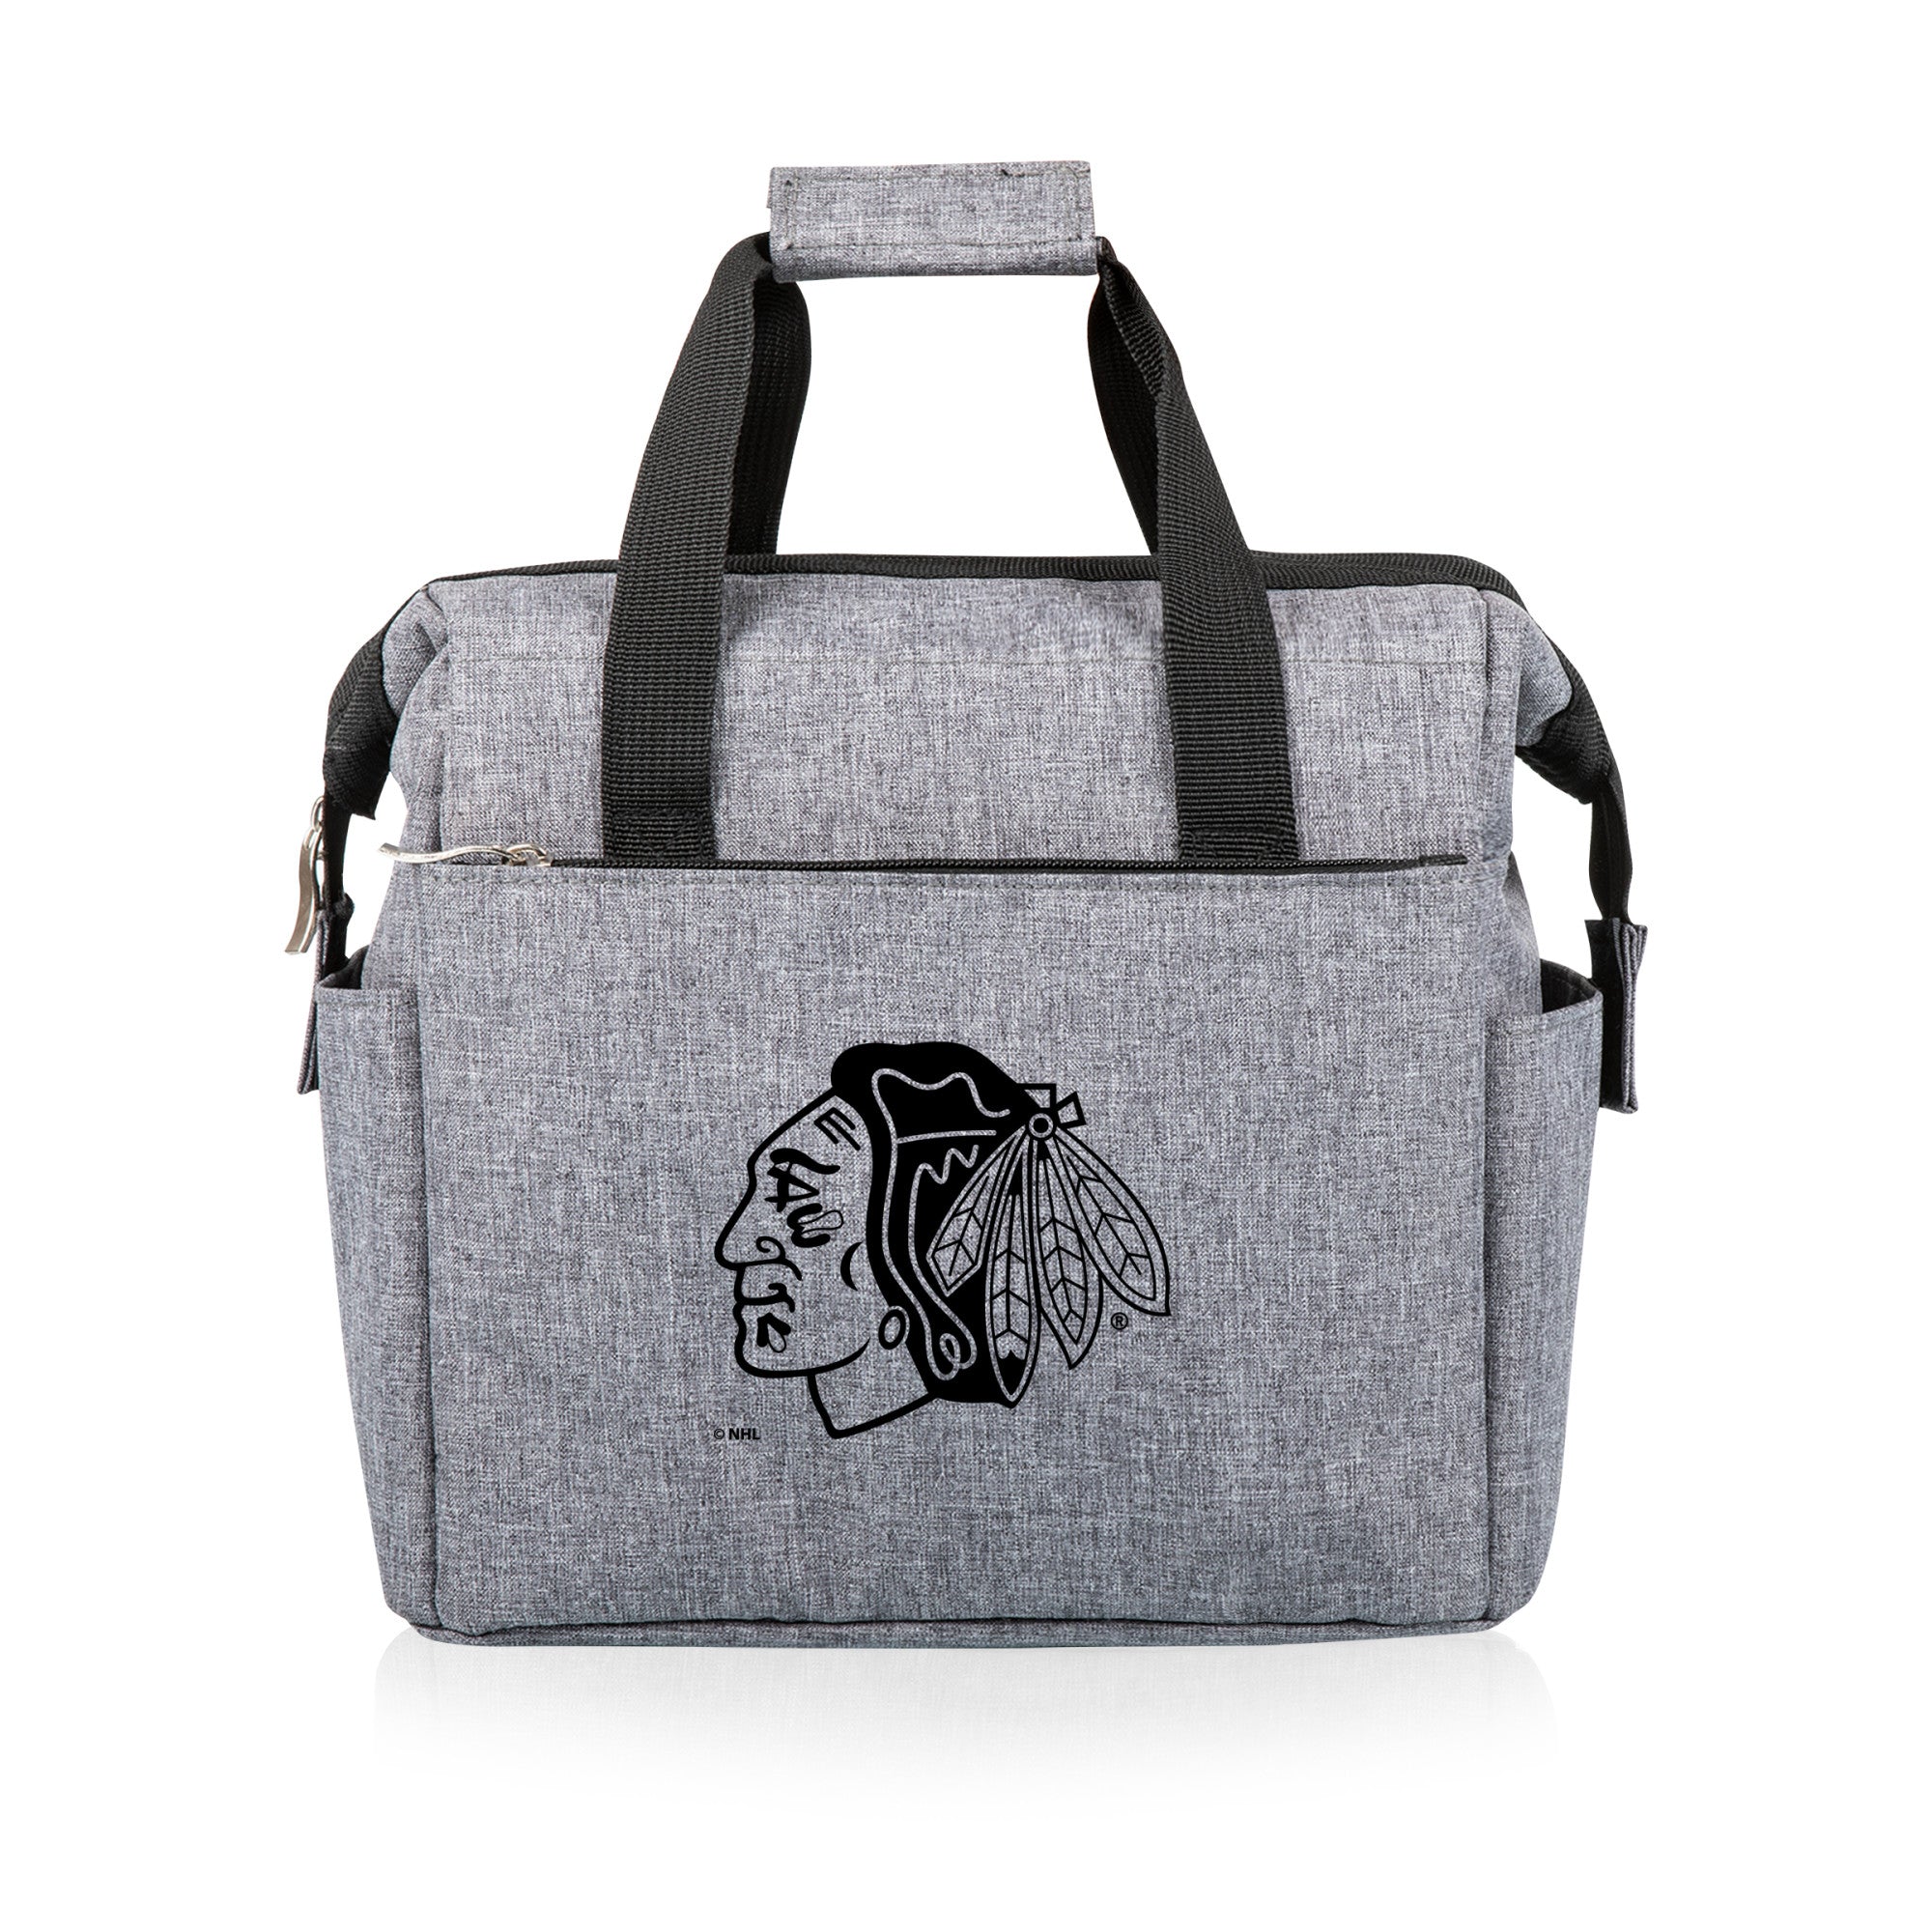 Chicago Blackhawks - On The Go Lunch Bag Cooler